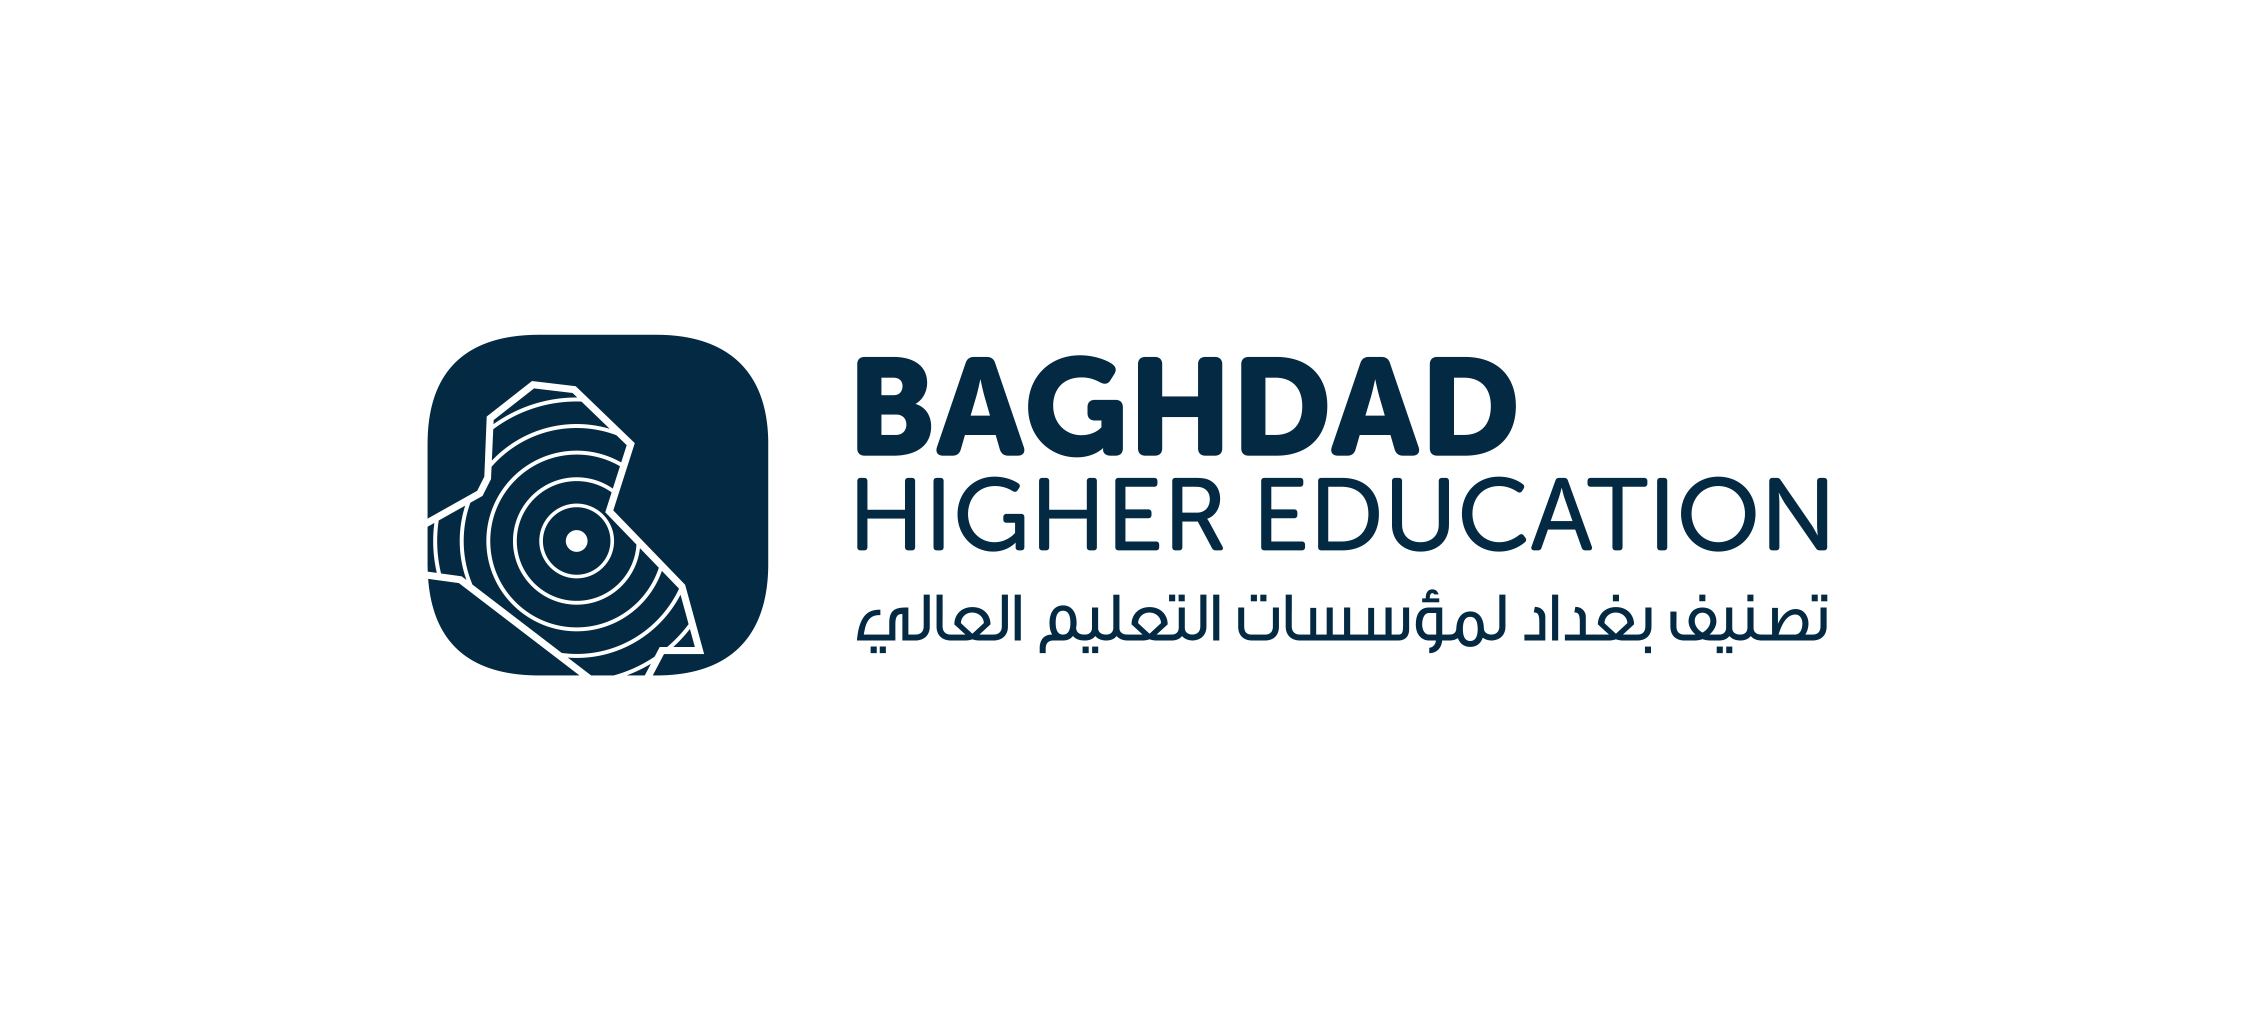 Baghdad Higher Education initiative